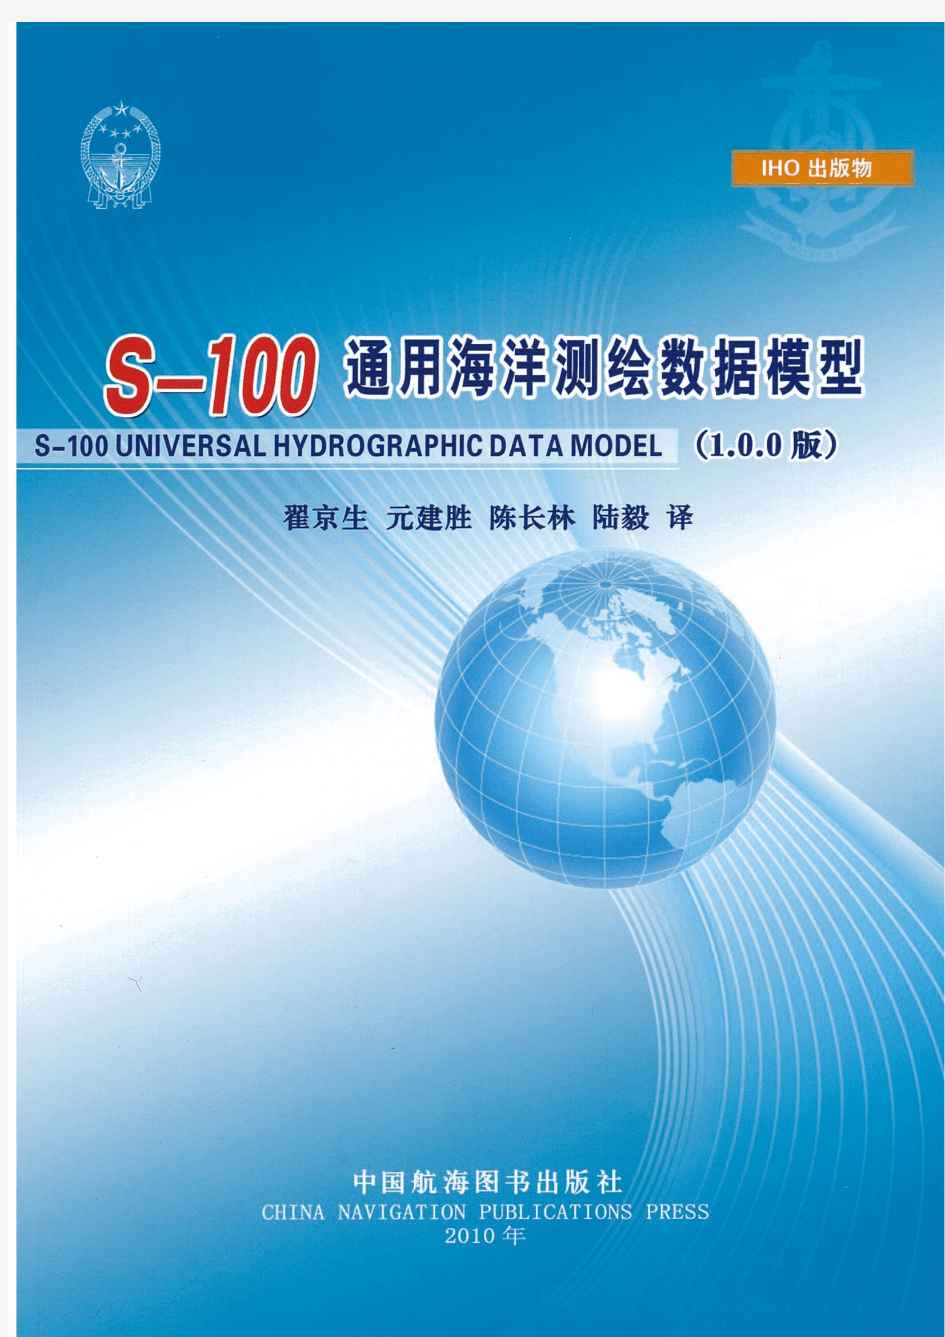 IHO 最新国际标准—S-100通用海洋测绘数据模型(中文版)2 注册表管理